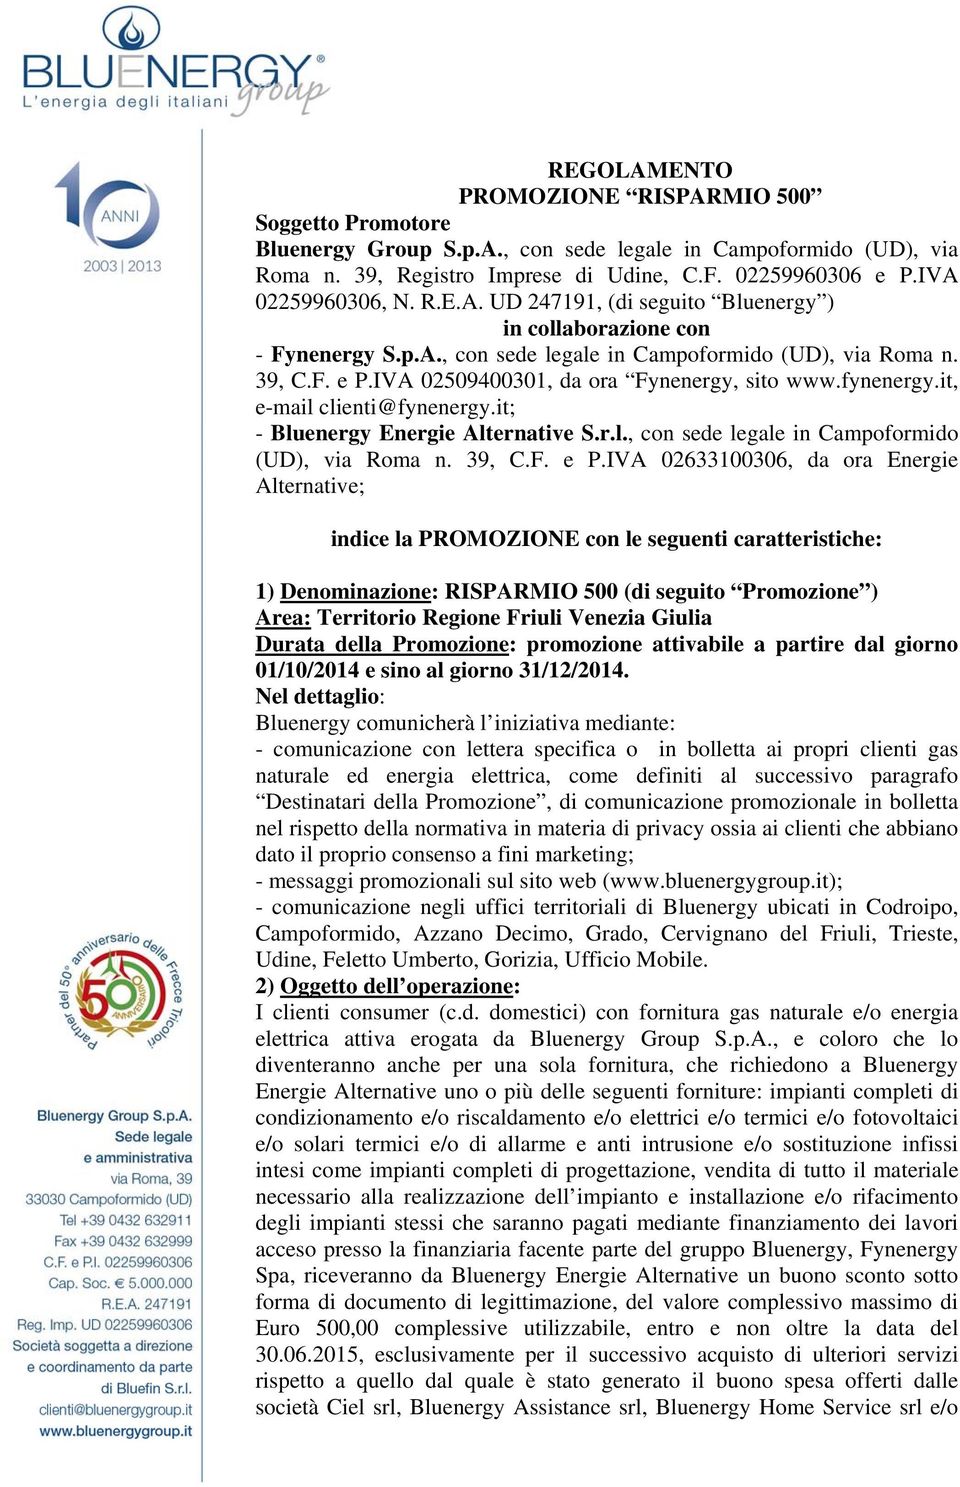 IVA 02509400301, da ora Fynenergy, sito www.fynenergy.it, e-mail clienti@fynenergy.it; - Bluenergy Energie Alternative S.r.l., con sede legale in Campoformido (UD), via Roma n. 39, C.F. e P.